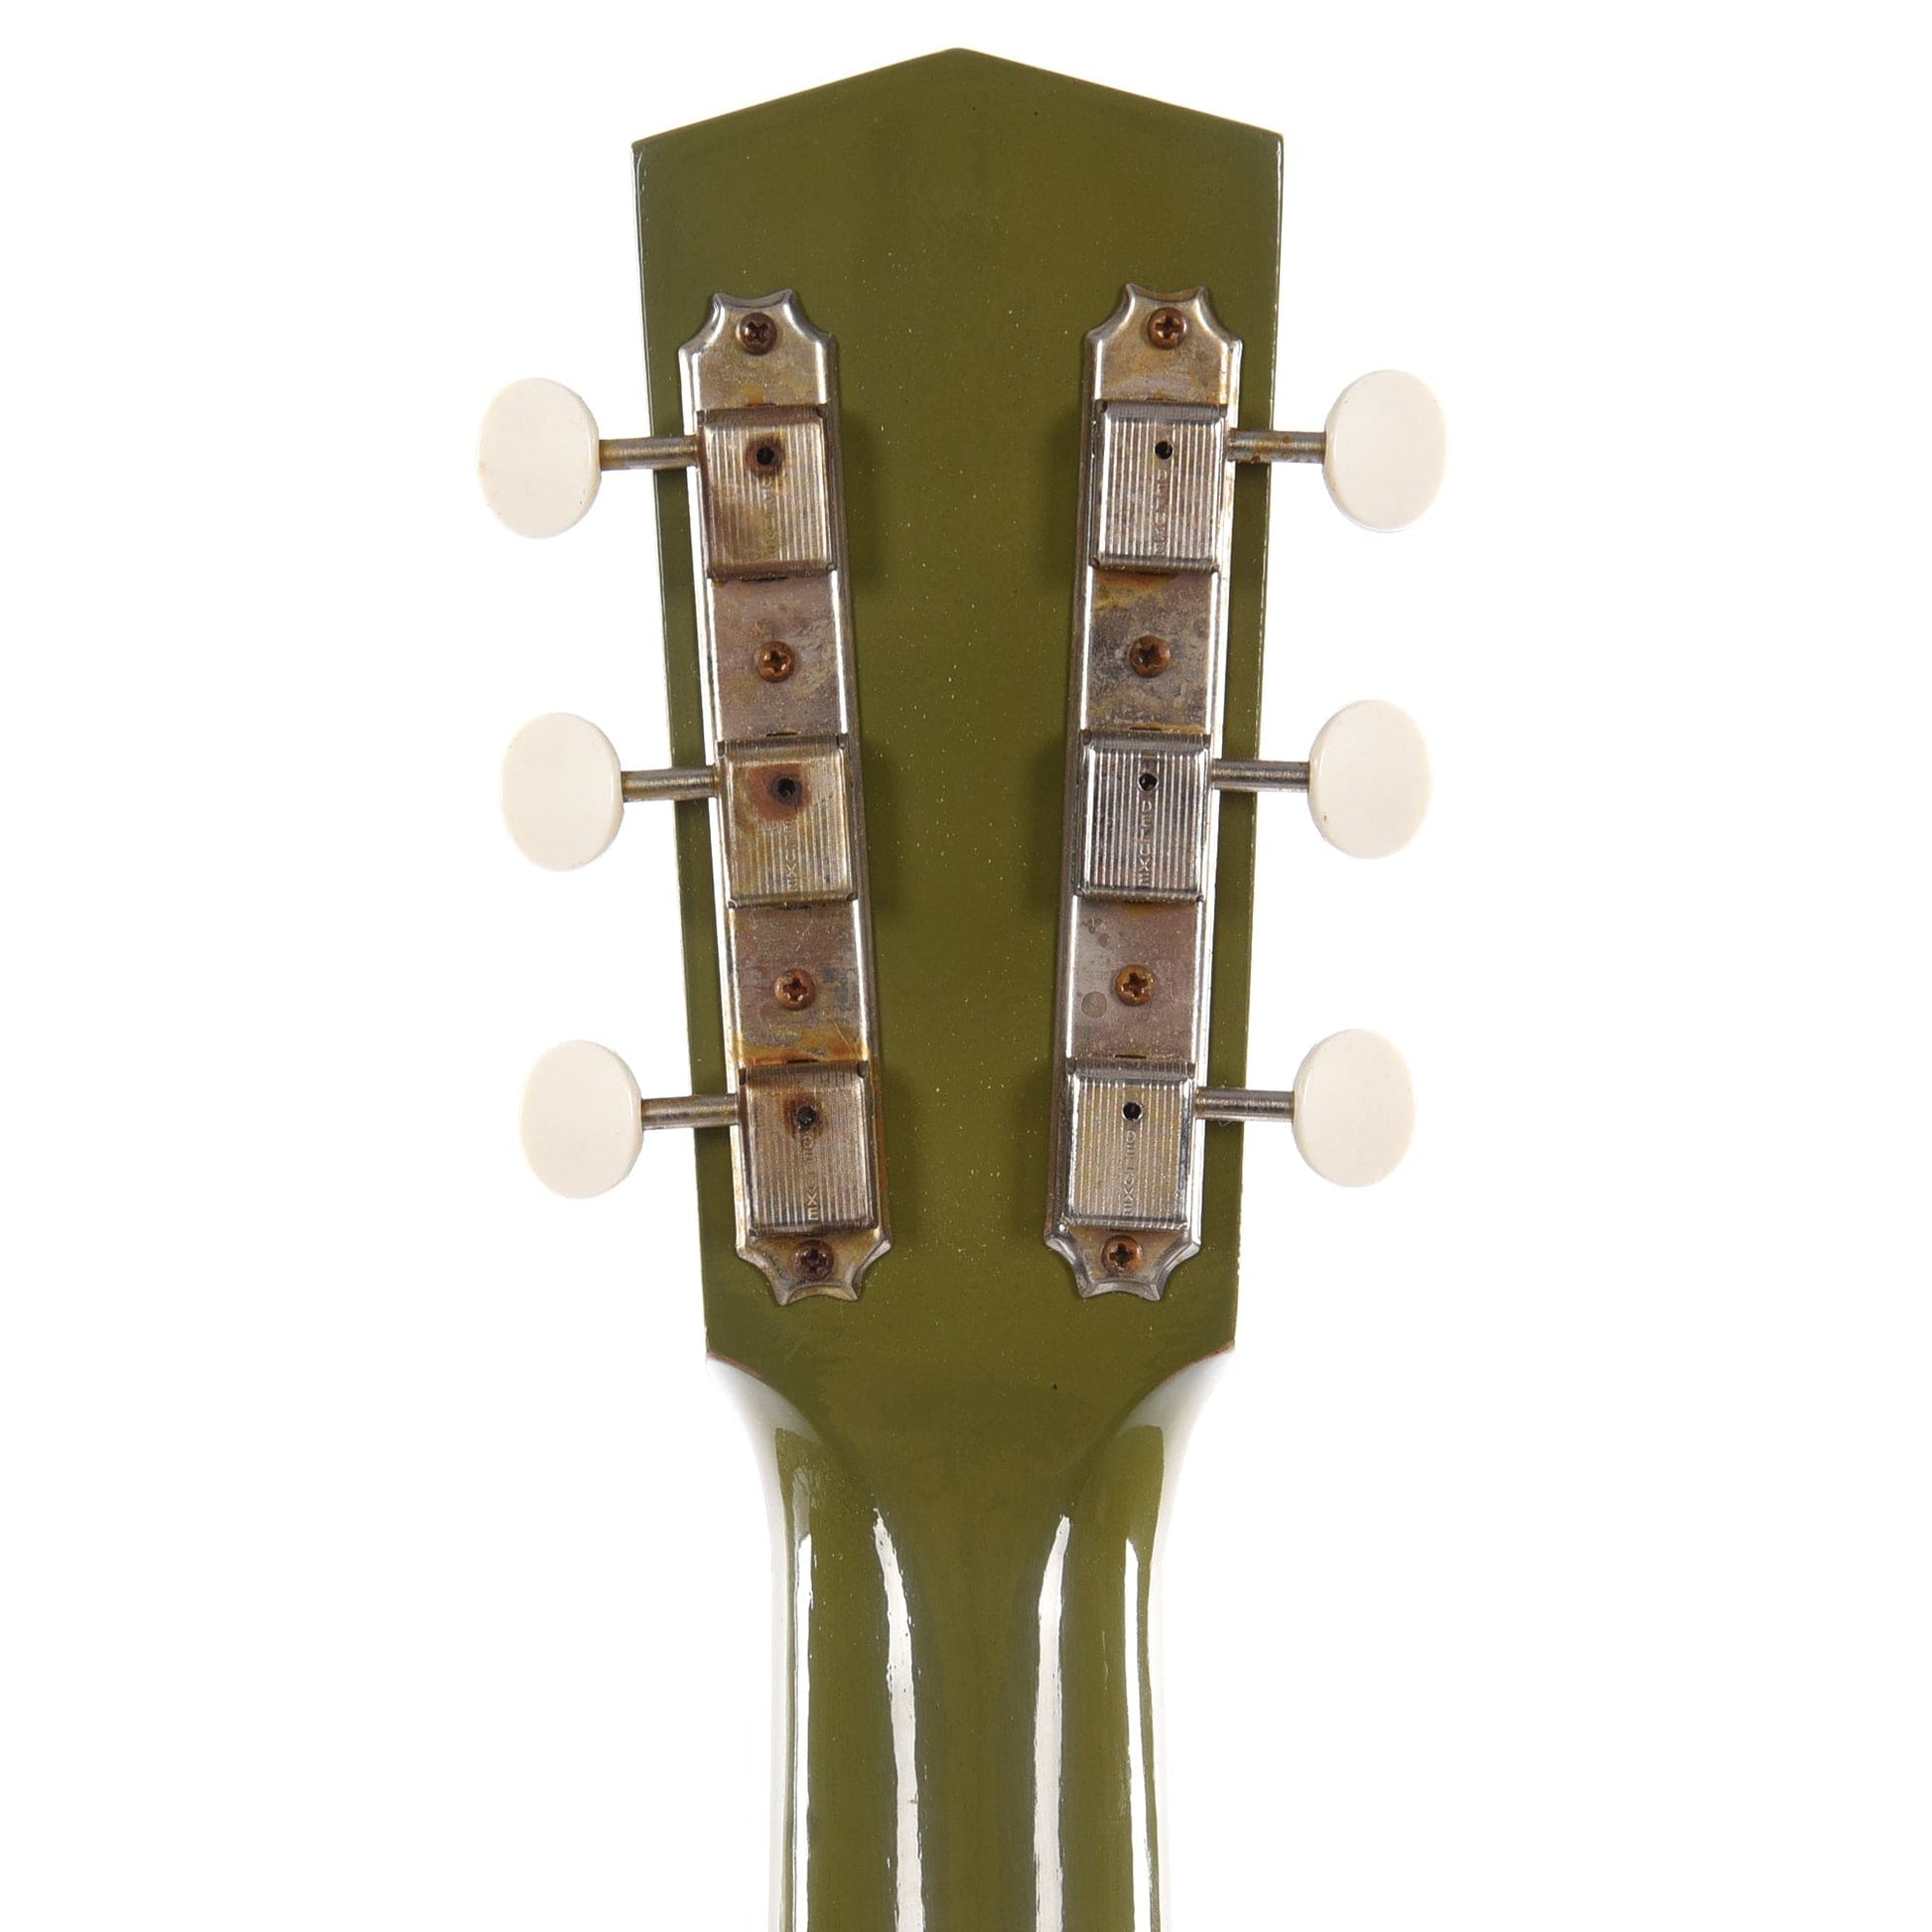 Atkin ASJ Custom 2-Tone Green w/Engraved Pickguard